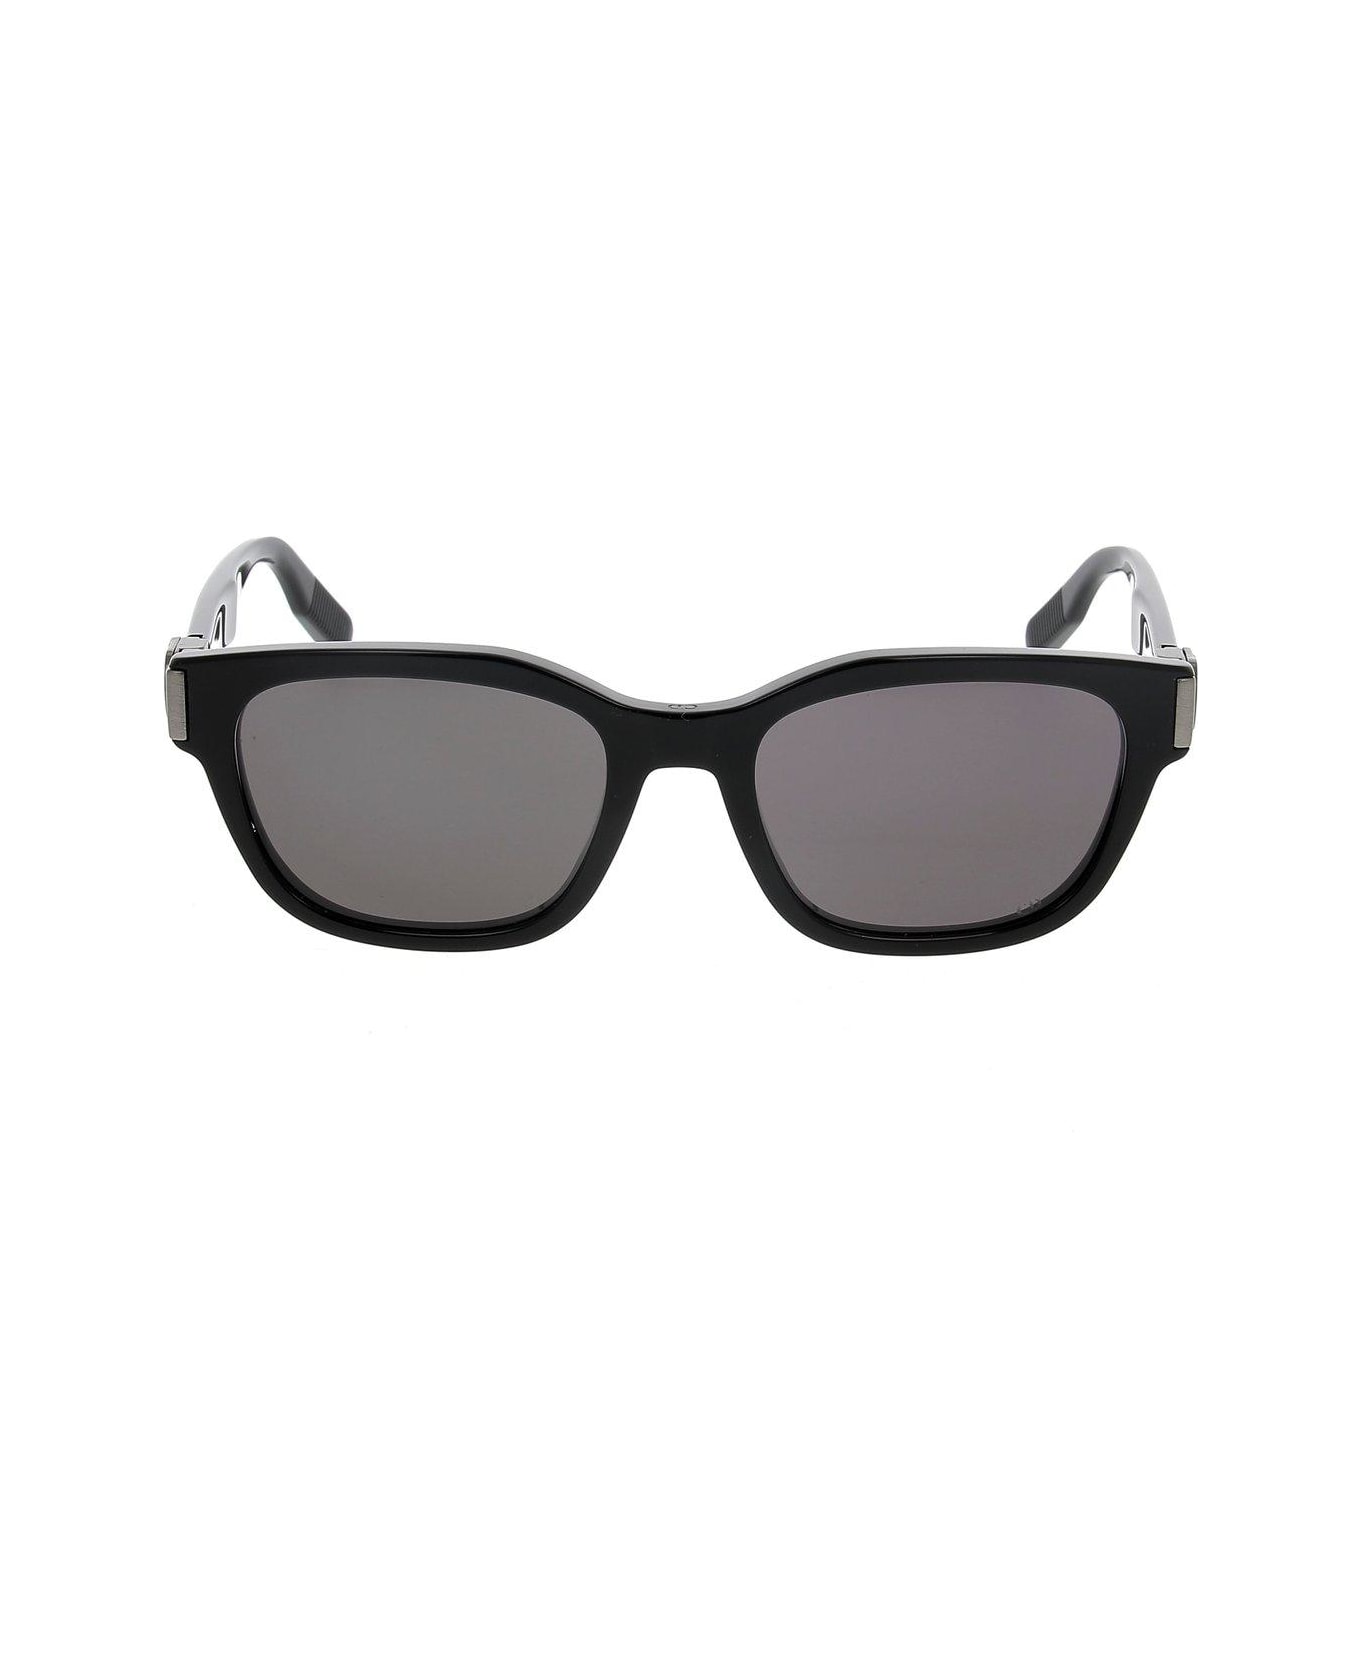 Dior Eyewear Rectangle Frame Sunglasses - 14a0 サングラス